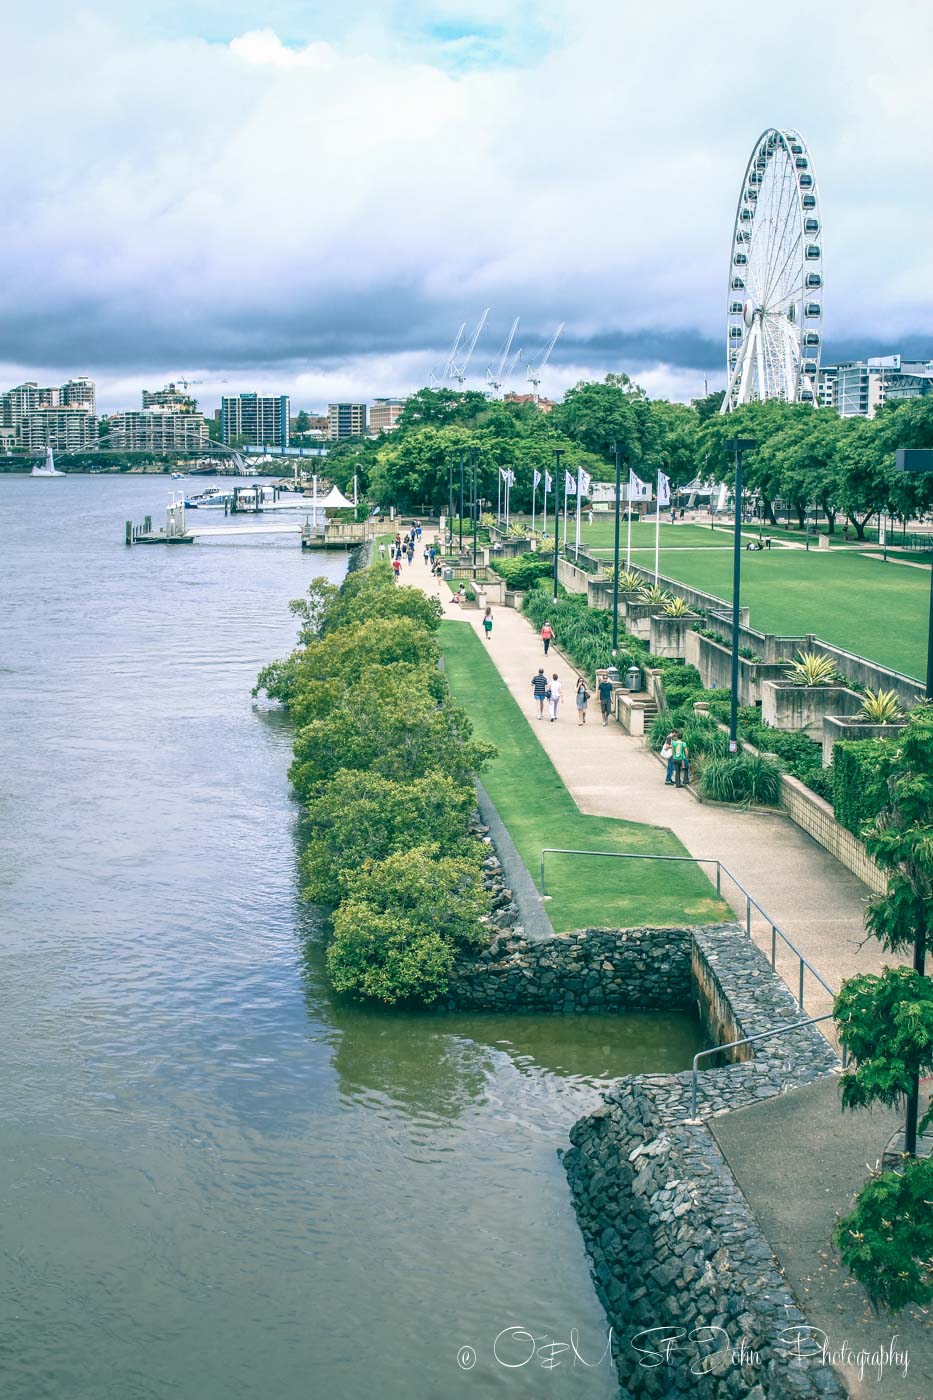 Things to do in Brisbane: Clem Jones Promenade runs along the river in South Bank. Brisbane